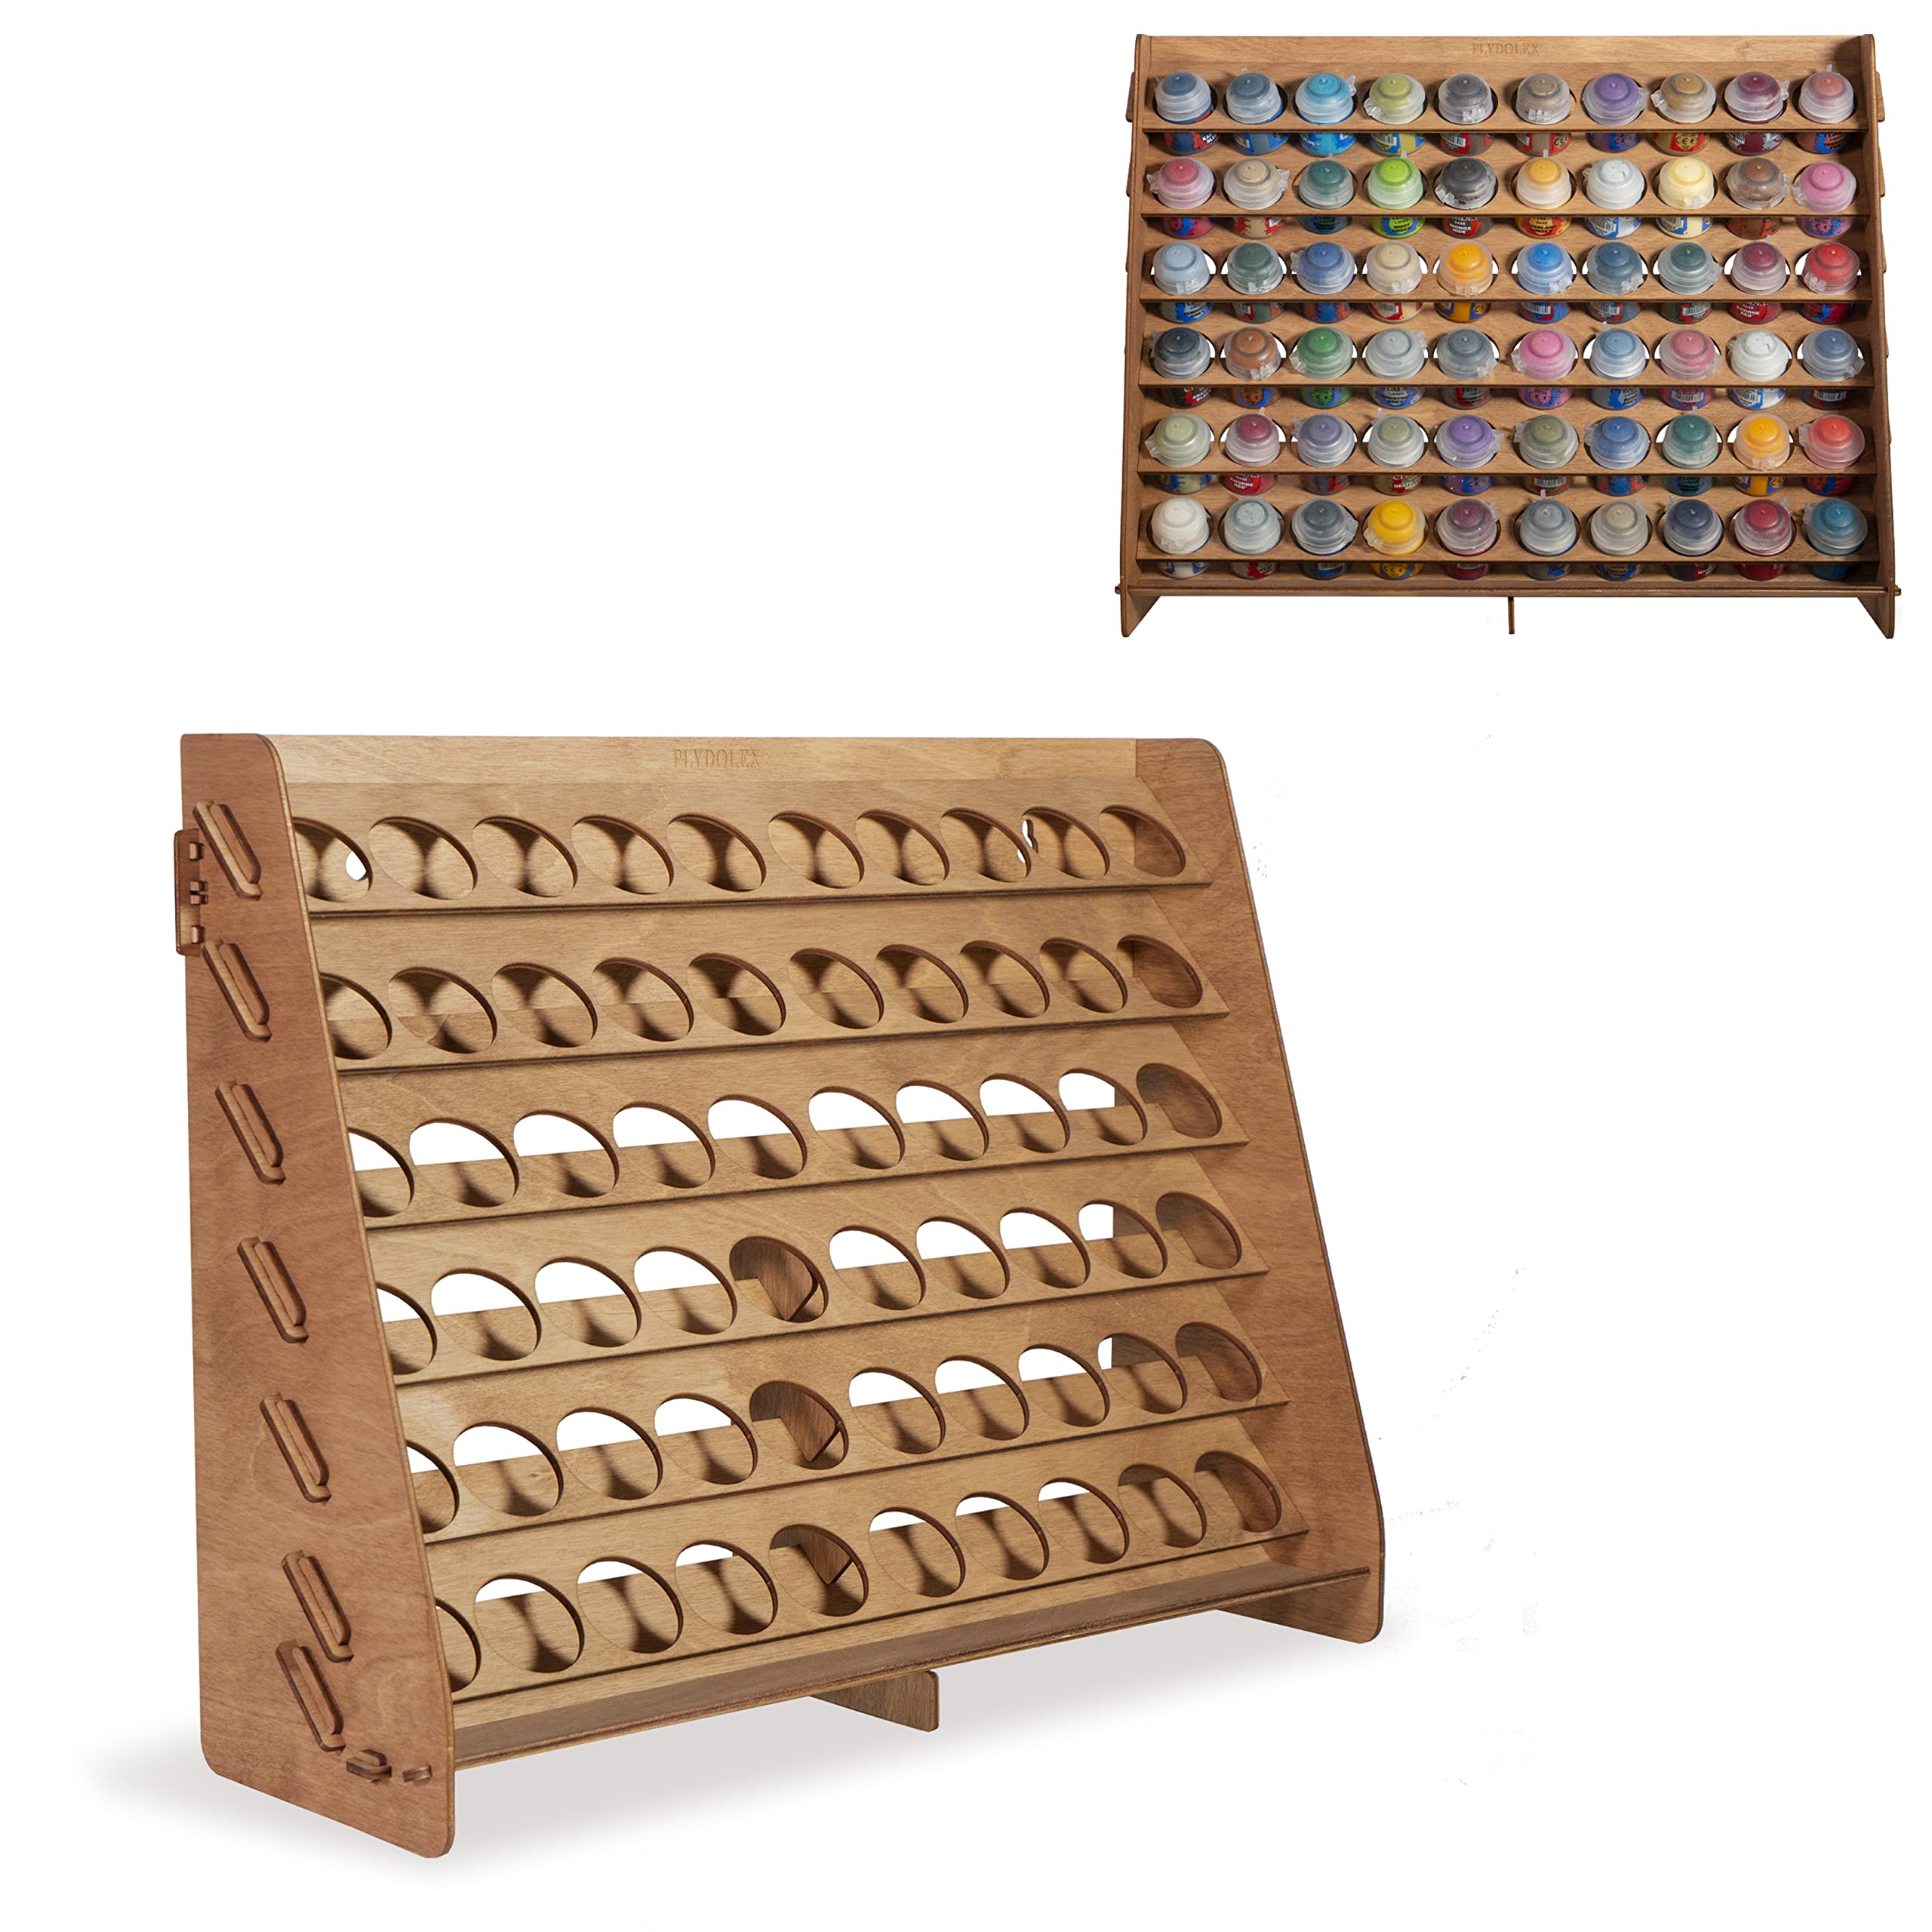 Plydolex Citadel Paint Rack Organizer with 60 Holes for Miniature